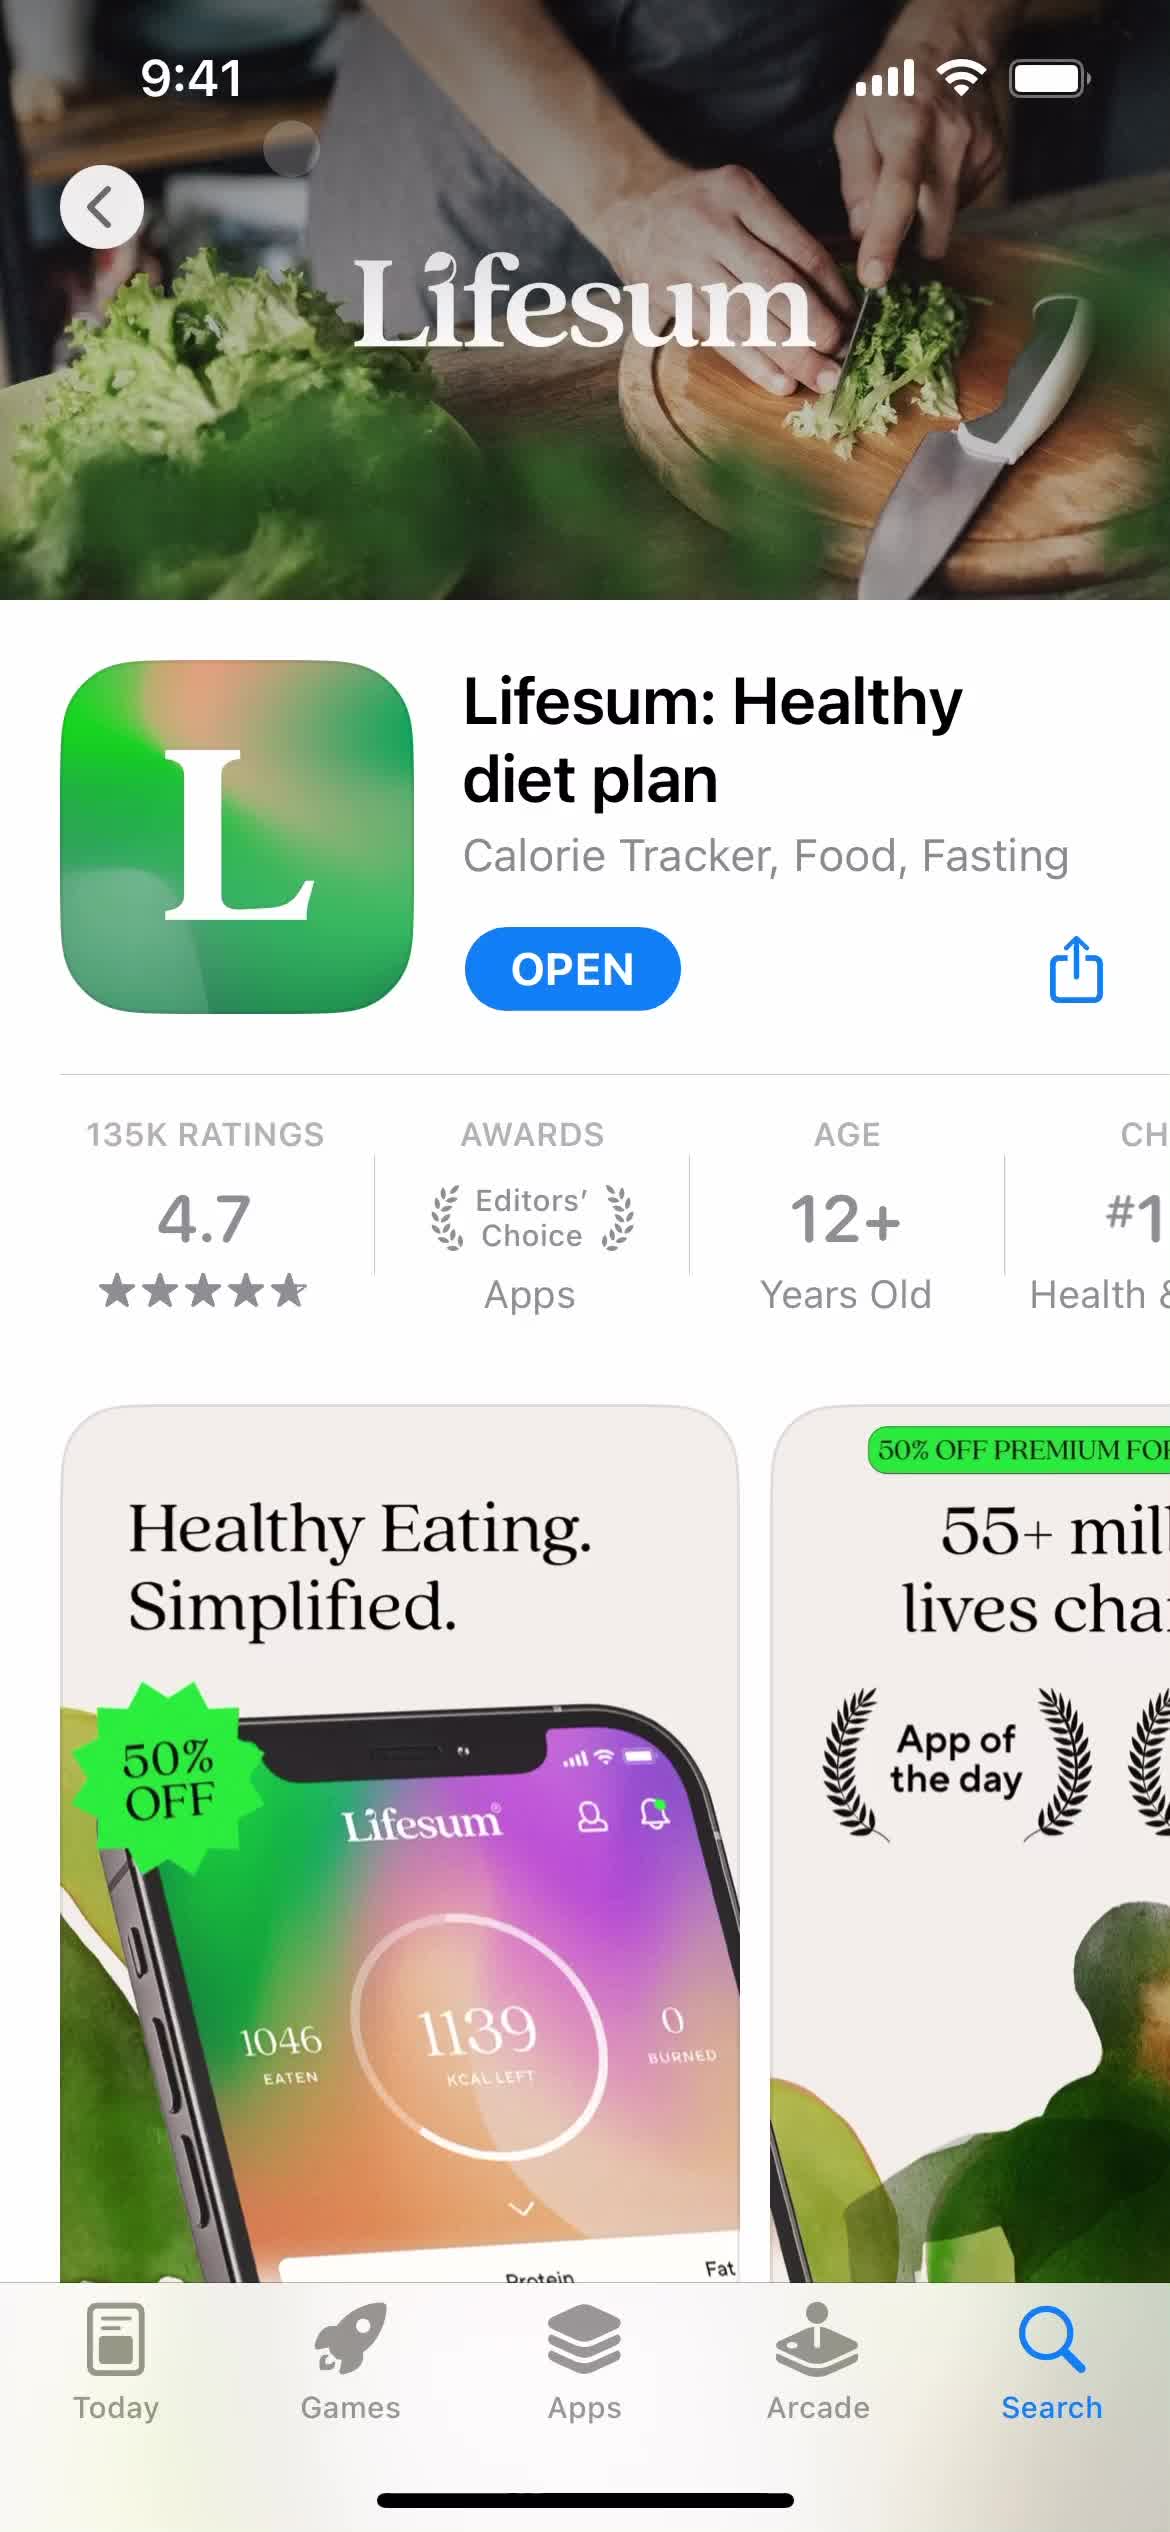 Lifesum app store listing screenshot